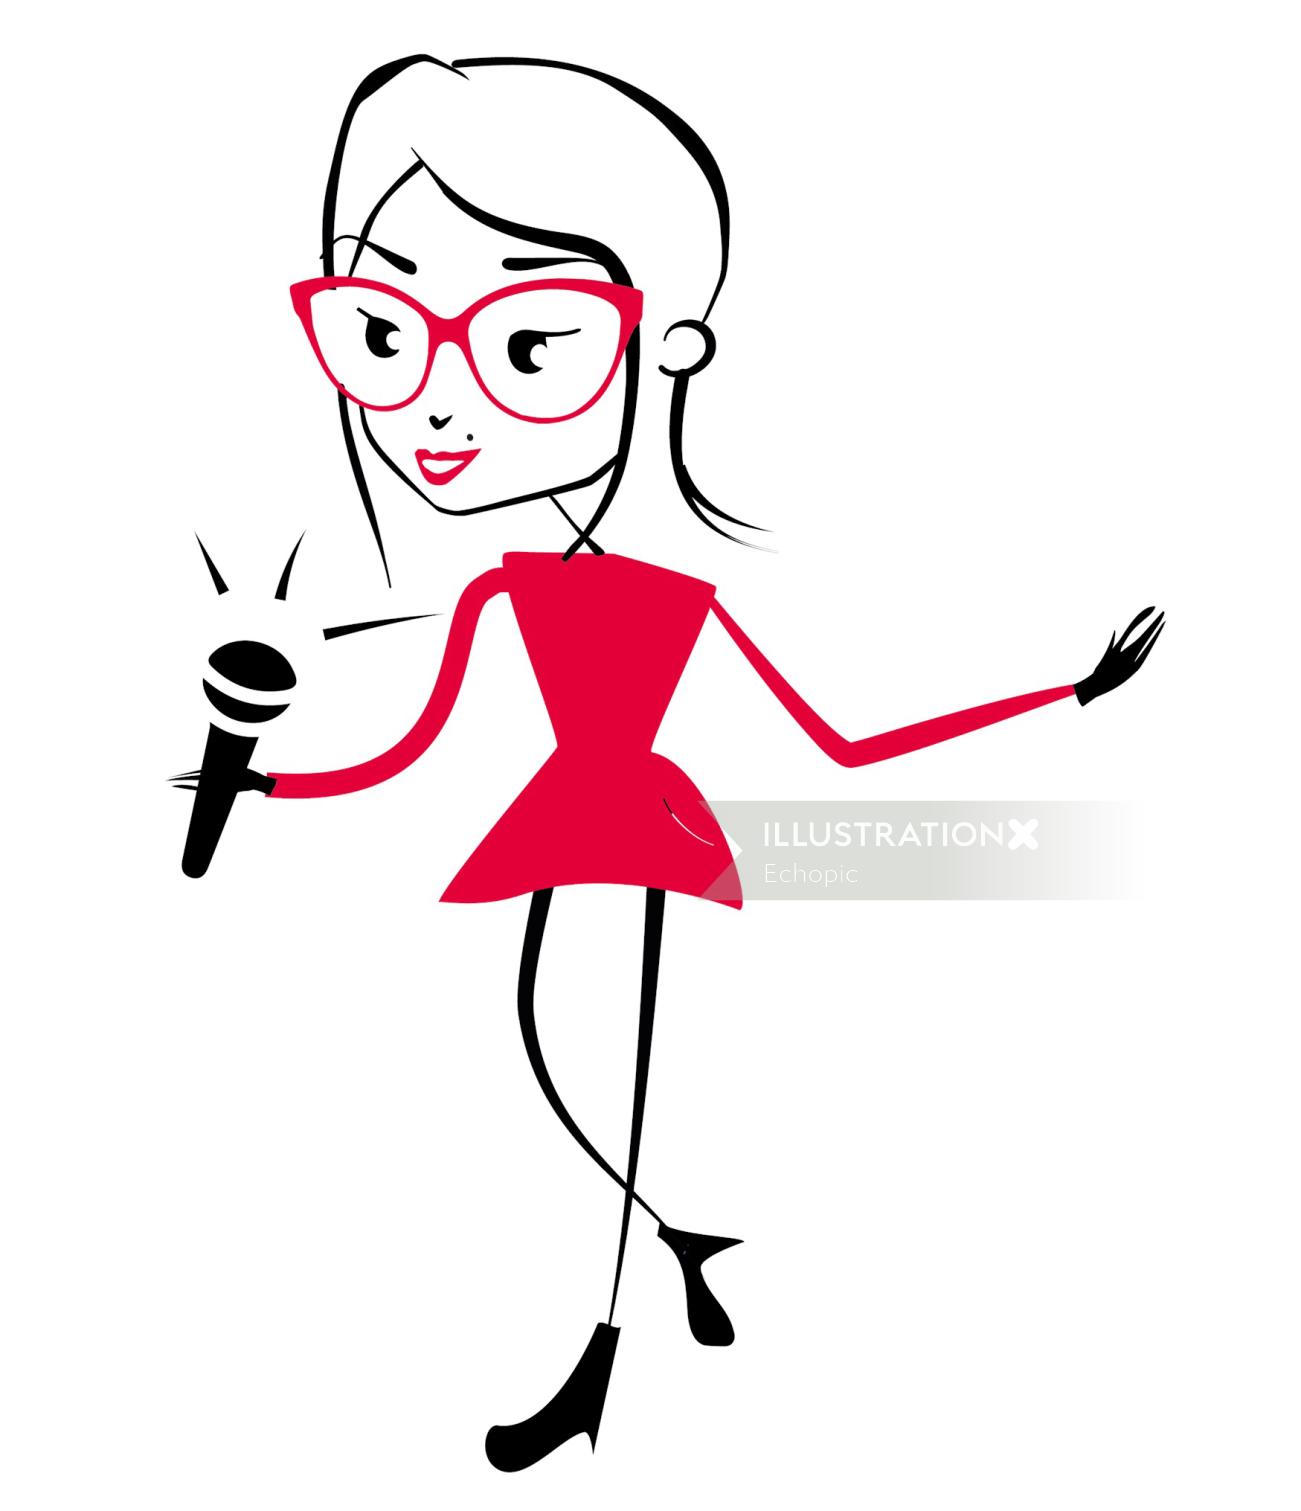 Entertainer female anchor graphical illustration